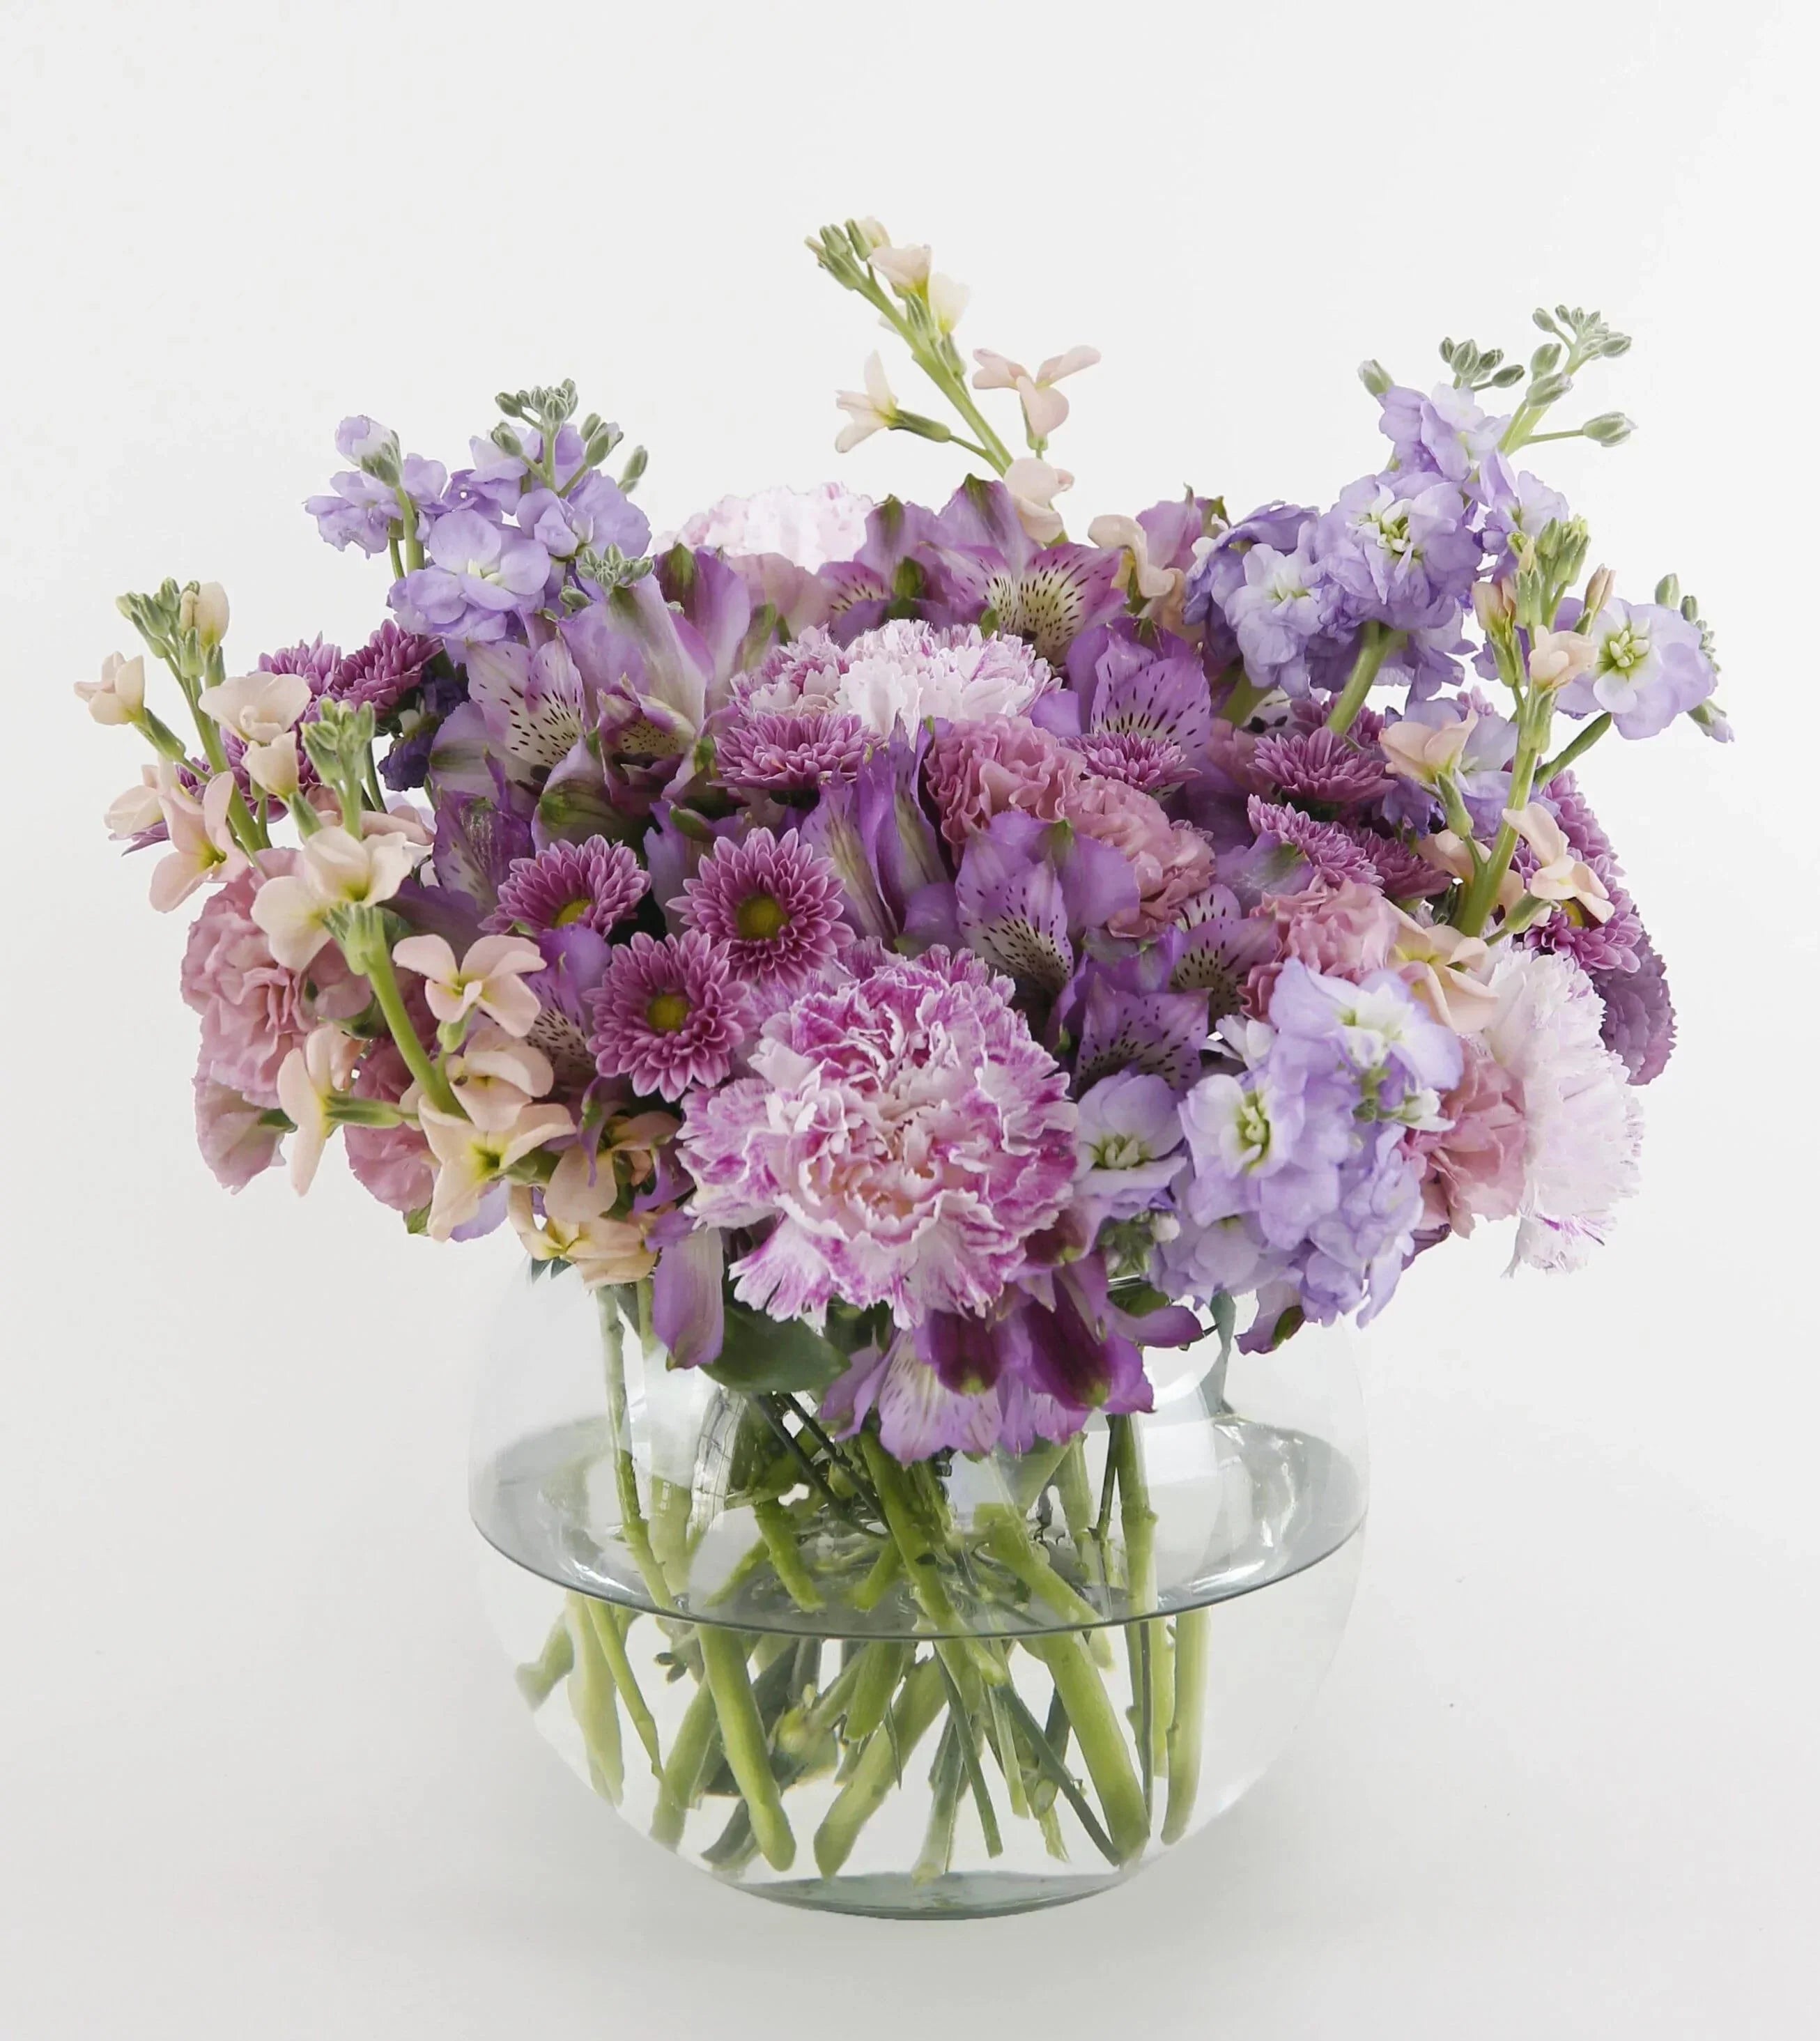 Delightful Discoveries Bouquet Fuller- lavender stock flowers, cream stock flowers, pink novelty carnations, purple alstroemeria flowers, purple button mums